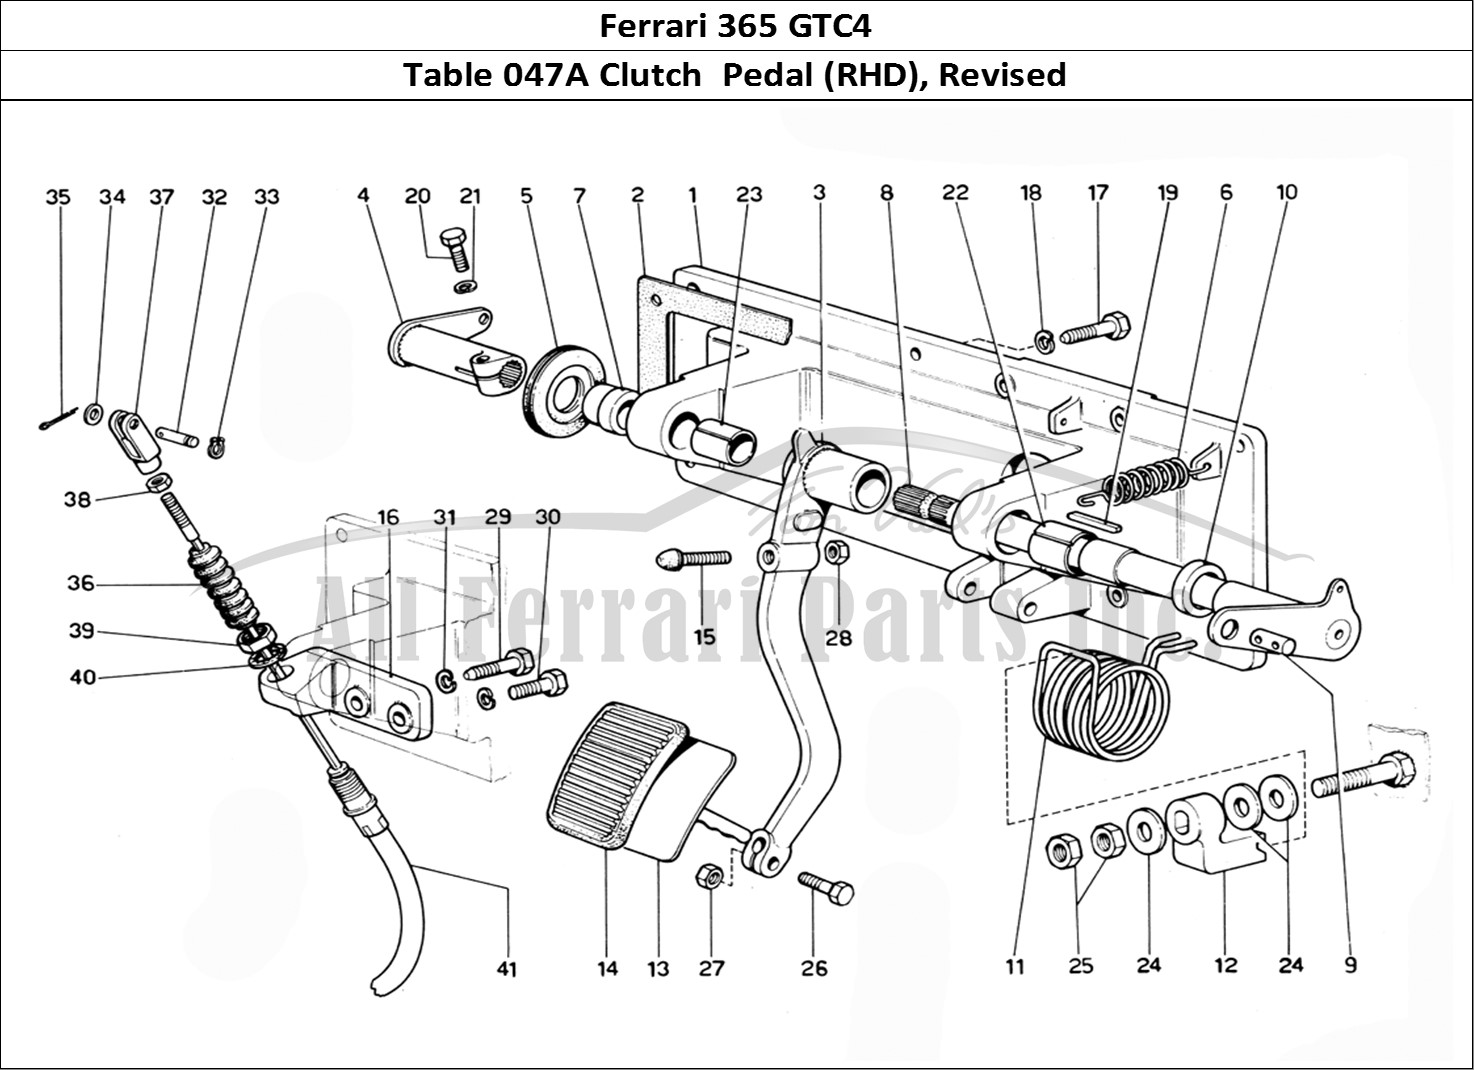 Ferrari Parts Ferrari 365 GTC4 (Mechanical) Page 047 Clutch pedal (RHD) - Rev